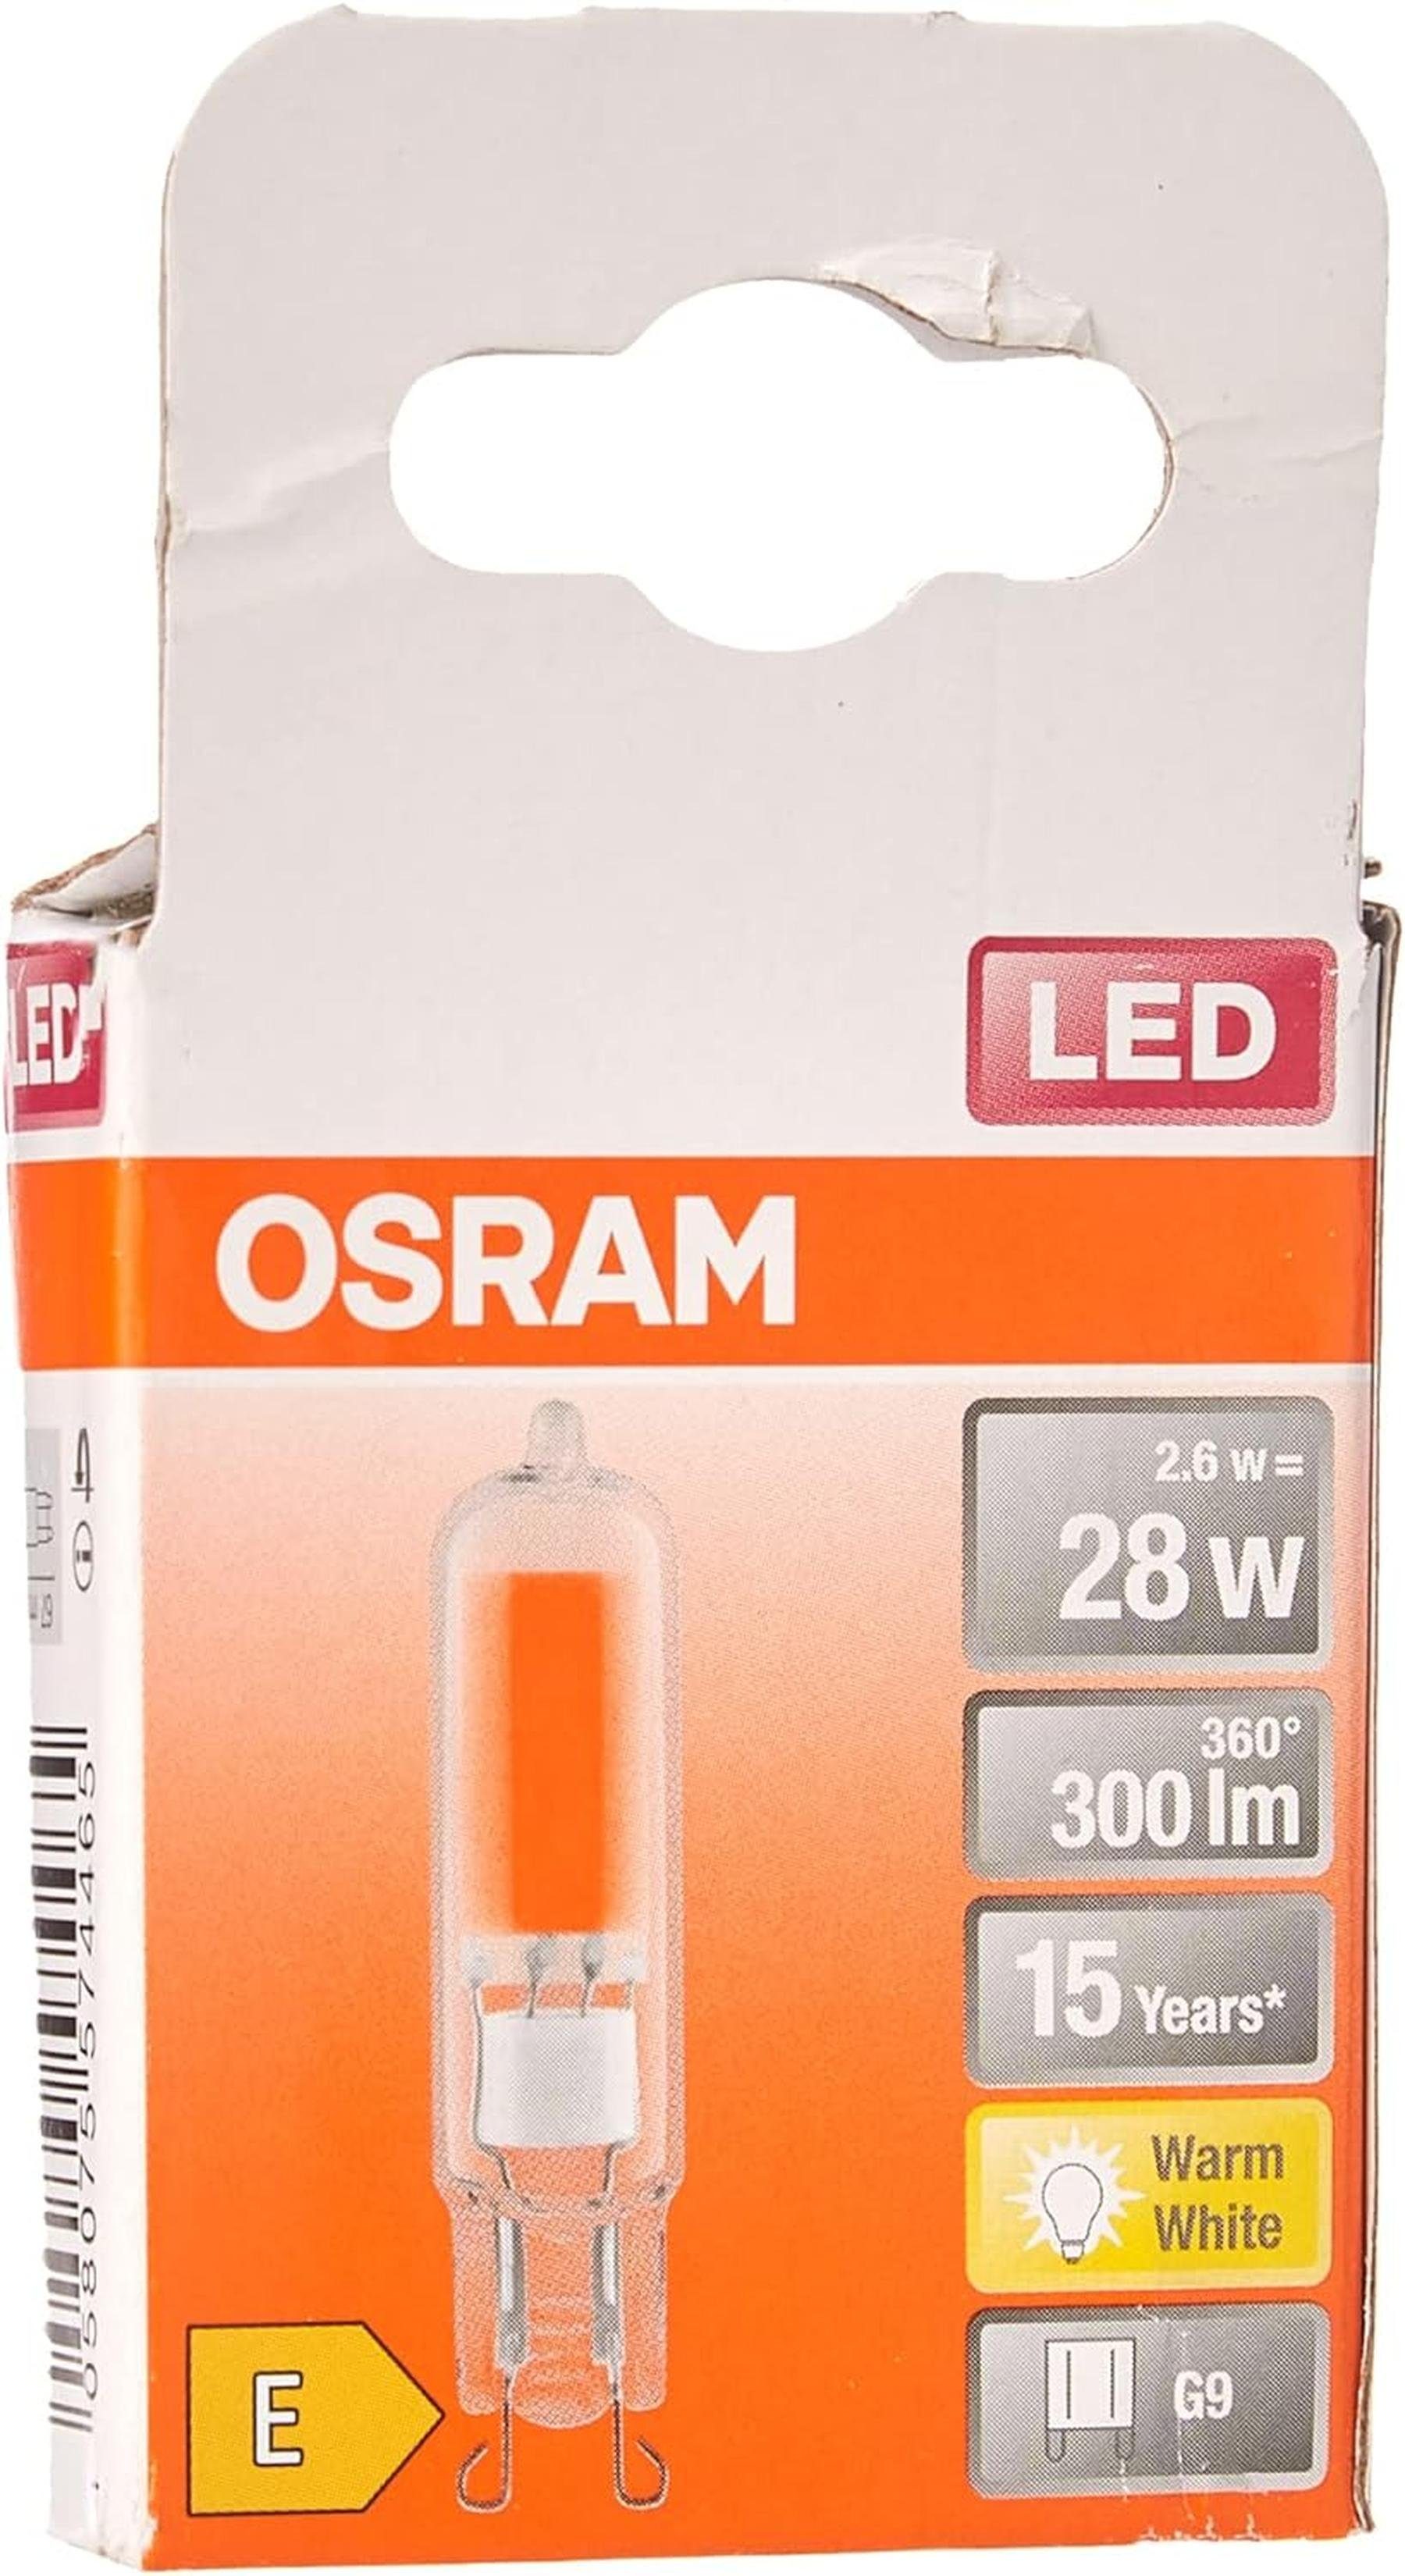 Star 2700K G9, Osram OSRAM Pinlampe LED Warmweiß, Stiftsockelleuchte 30W PIN, Special LED-Leuchtmittel